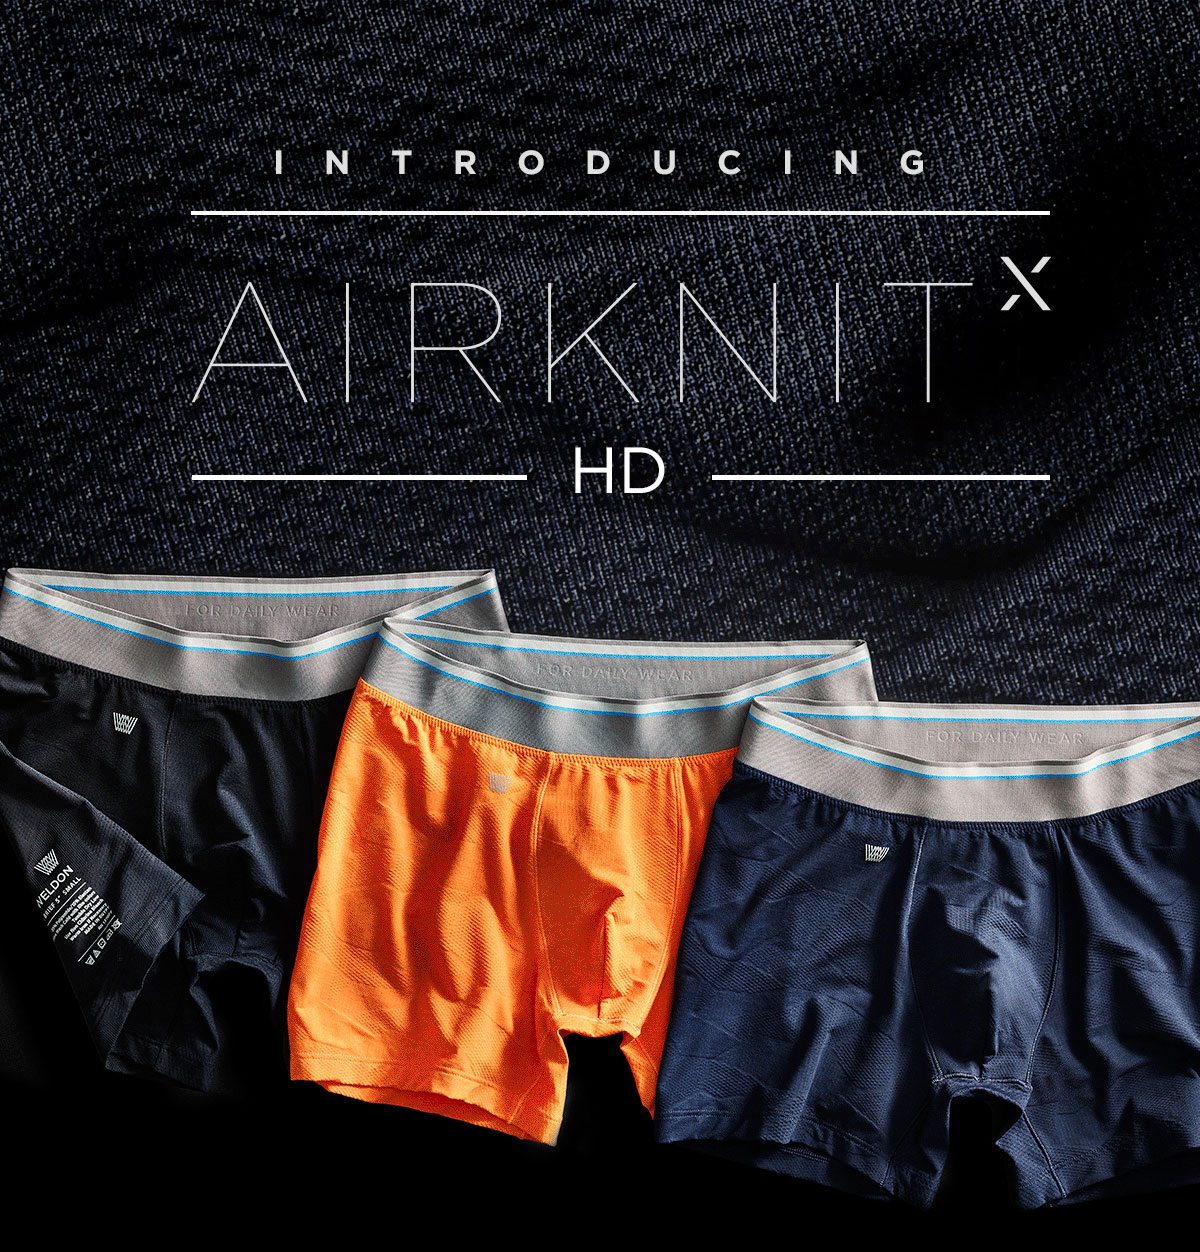 Mack Weldon Underwear Review - AIRKNITx HD 8 Boxer Briefs - Cloth